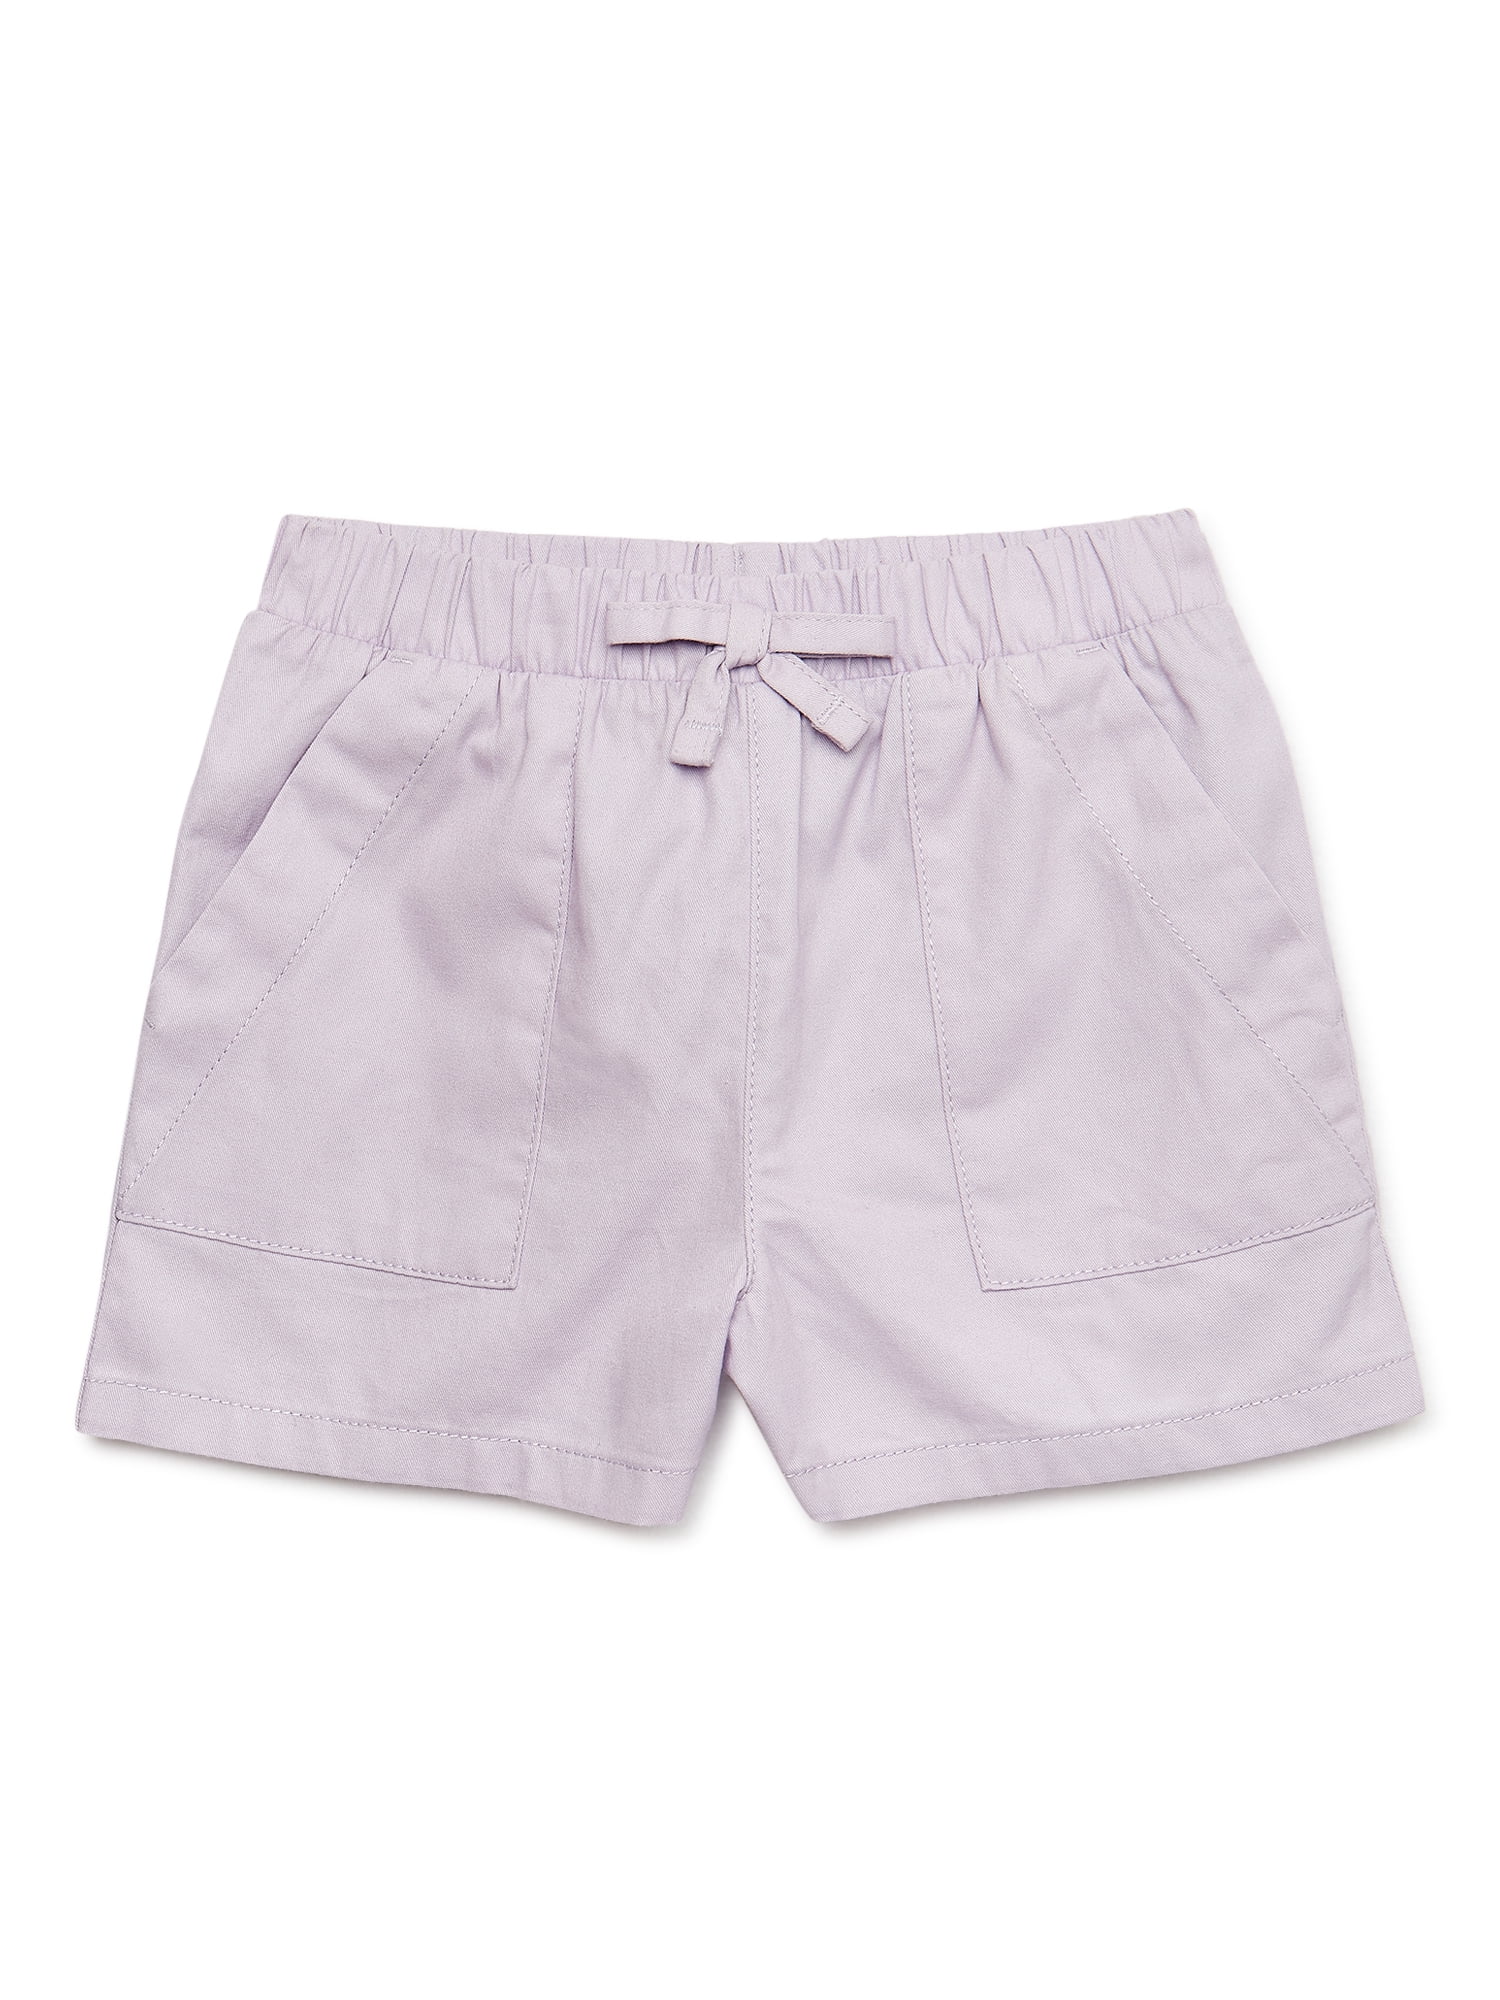 Garanimals Baby and Toddler Girl Woven Shorts, Sizes 12M-5T - Walmart.com